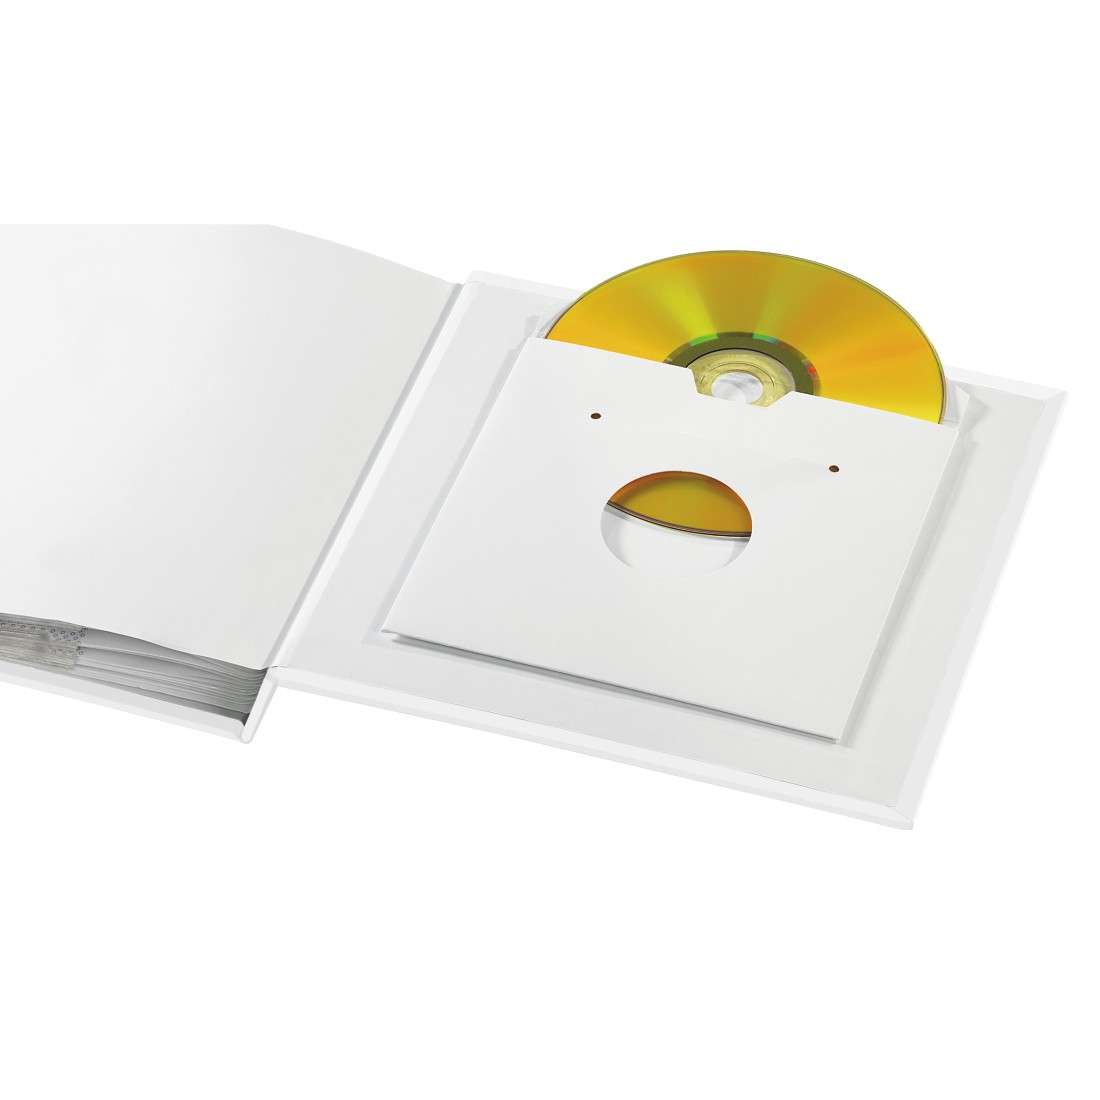 Memo-Album Skies, für 200 Fotos im Format 10x15 cm, Beige